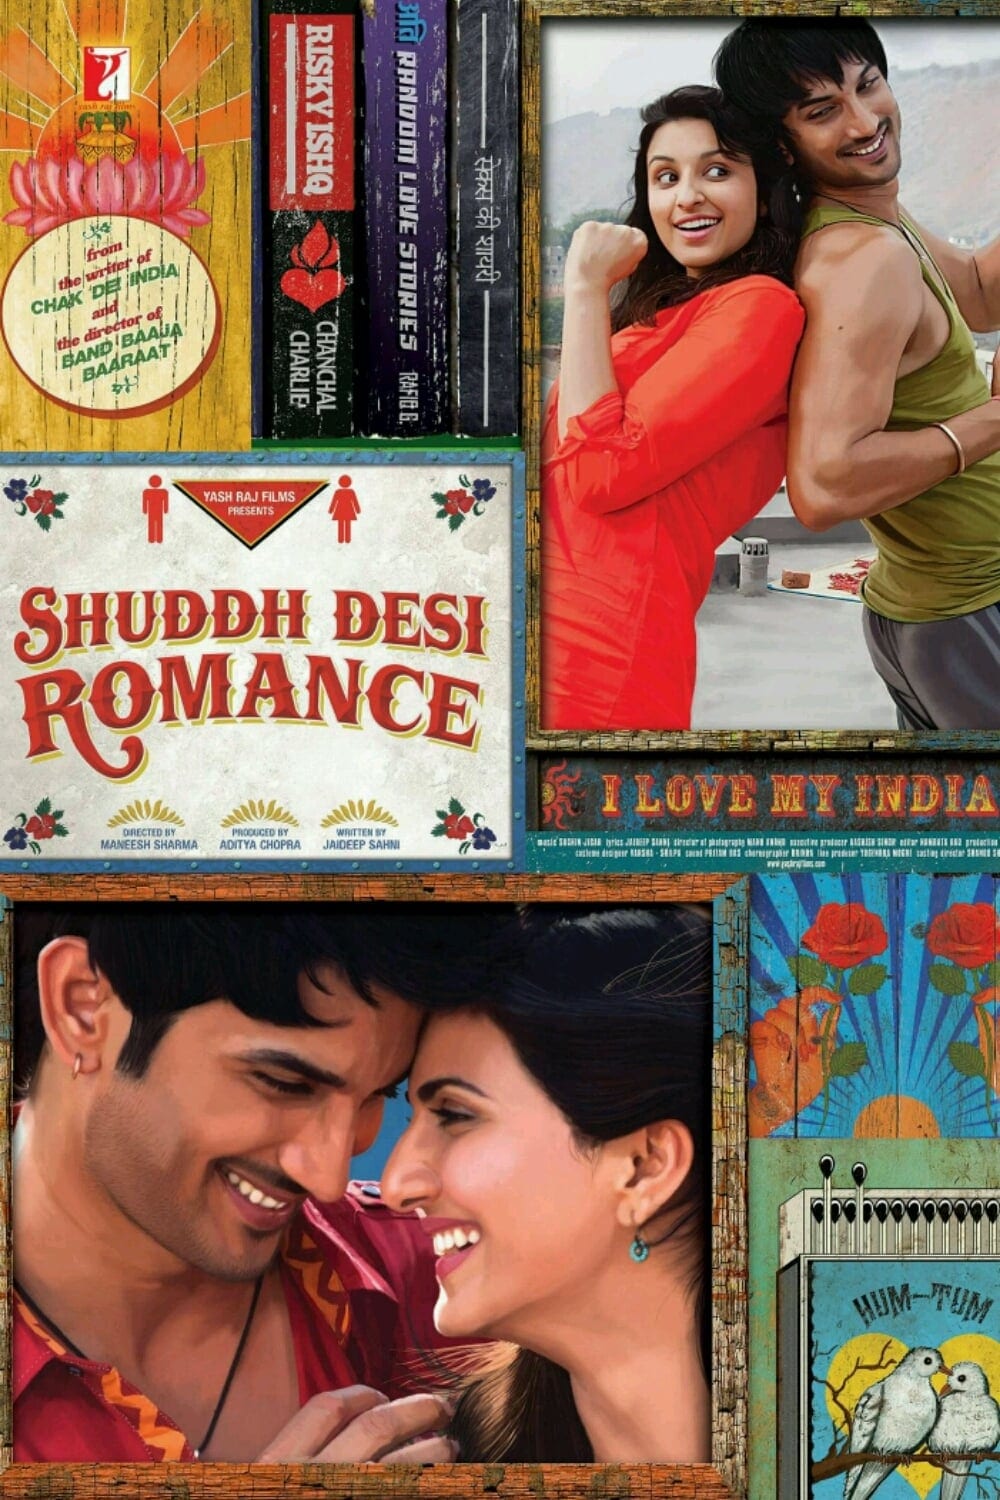 Poster for the movie "Shuddh Desi Romance"